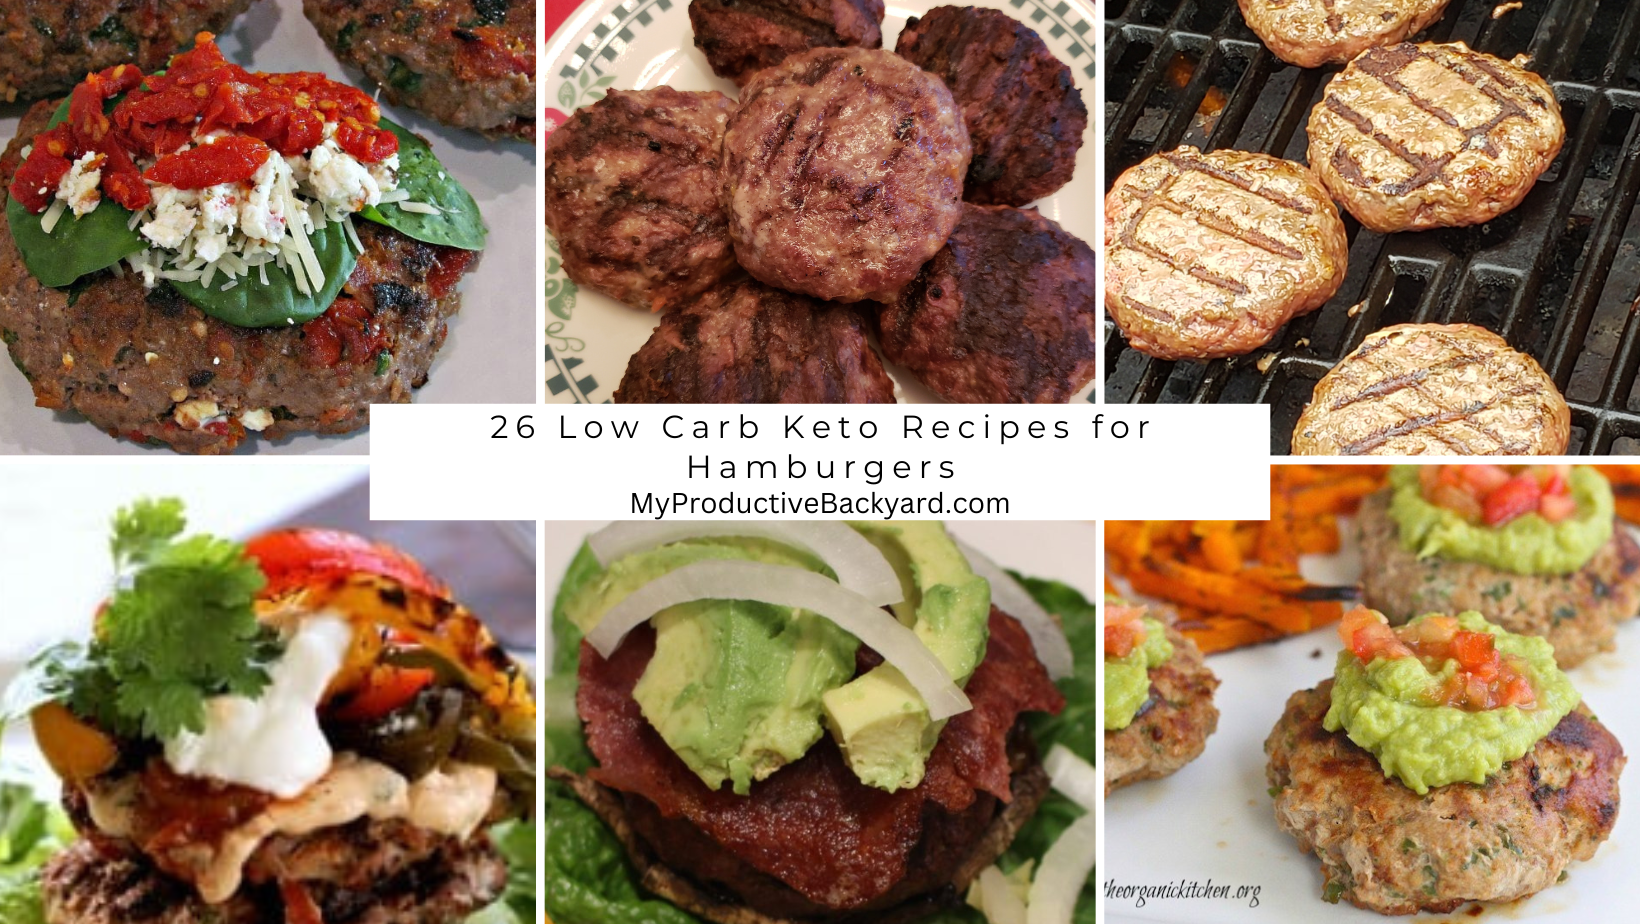 26 Low Carb Keto Recipes for Hamburgers - My Productive Backyard